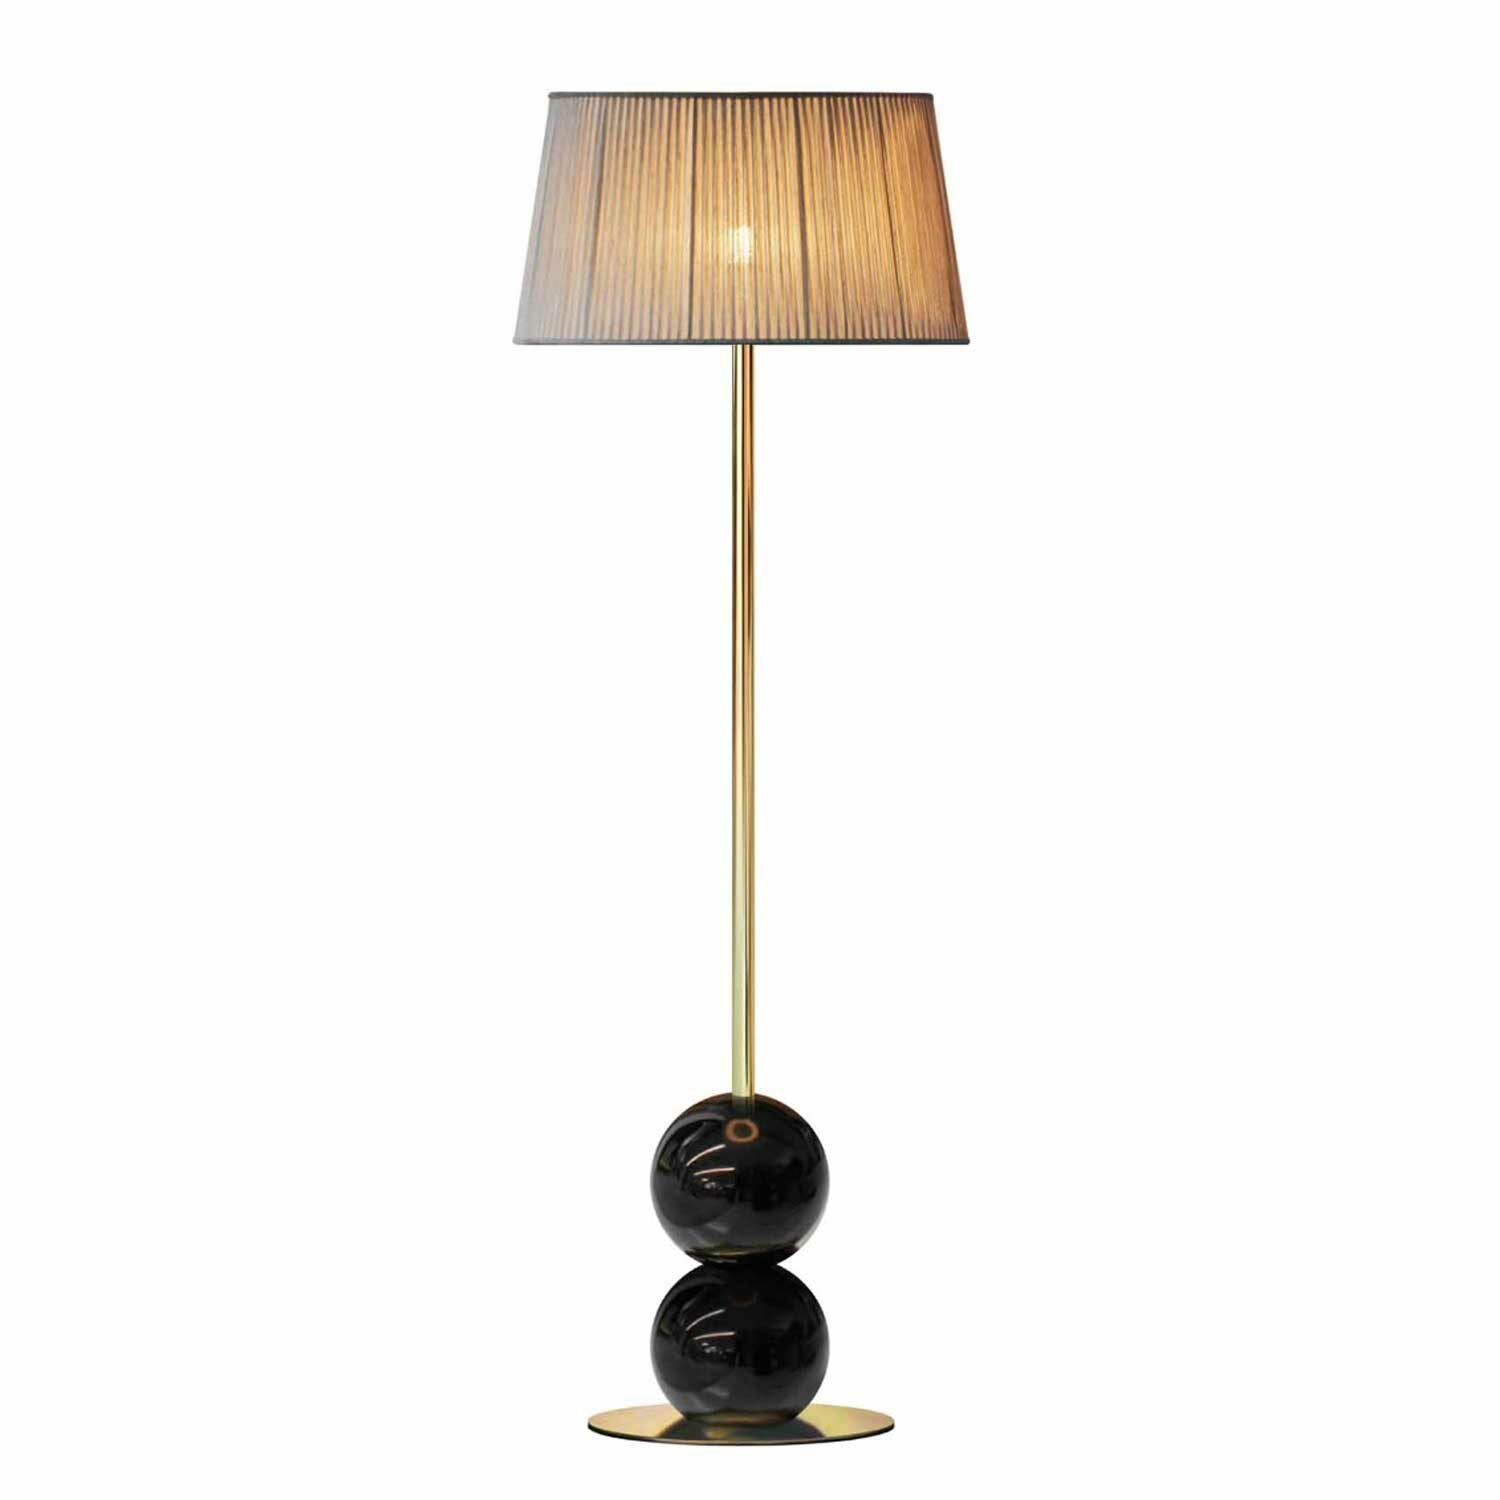 MUSEU floor lamp